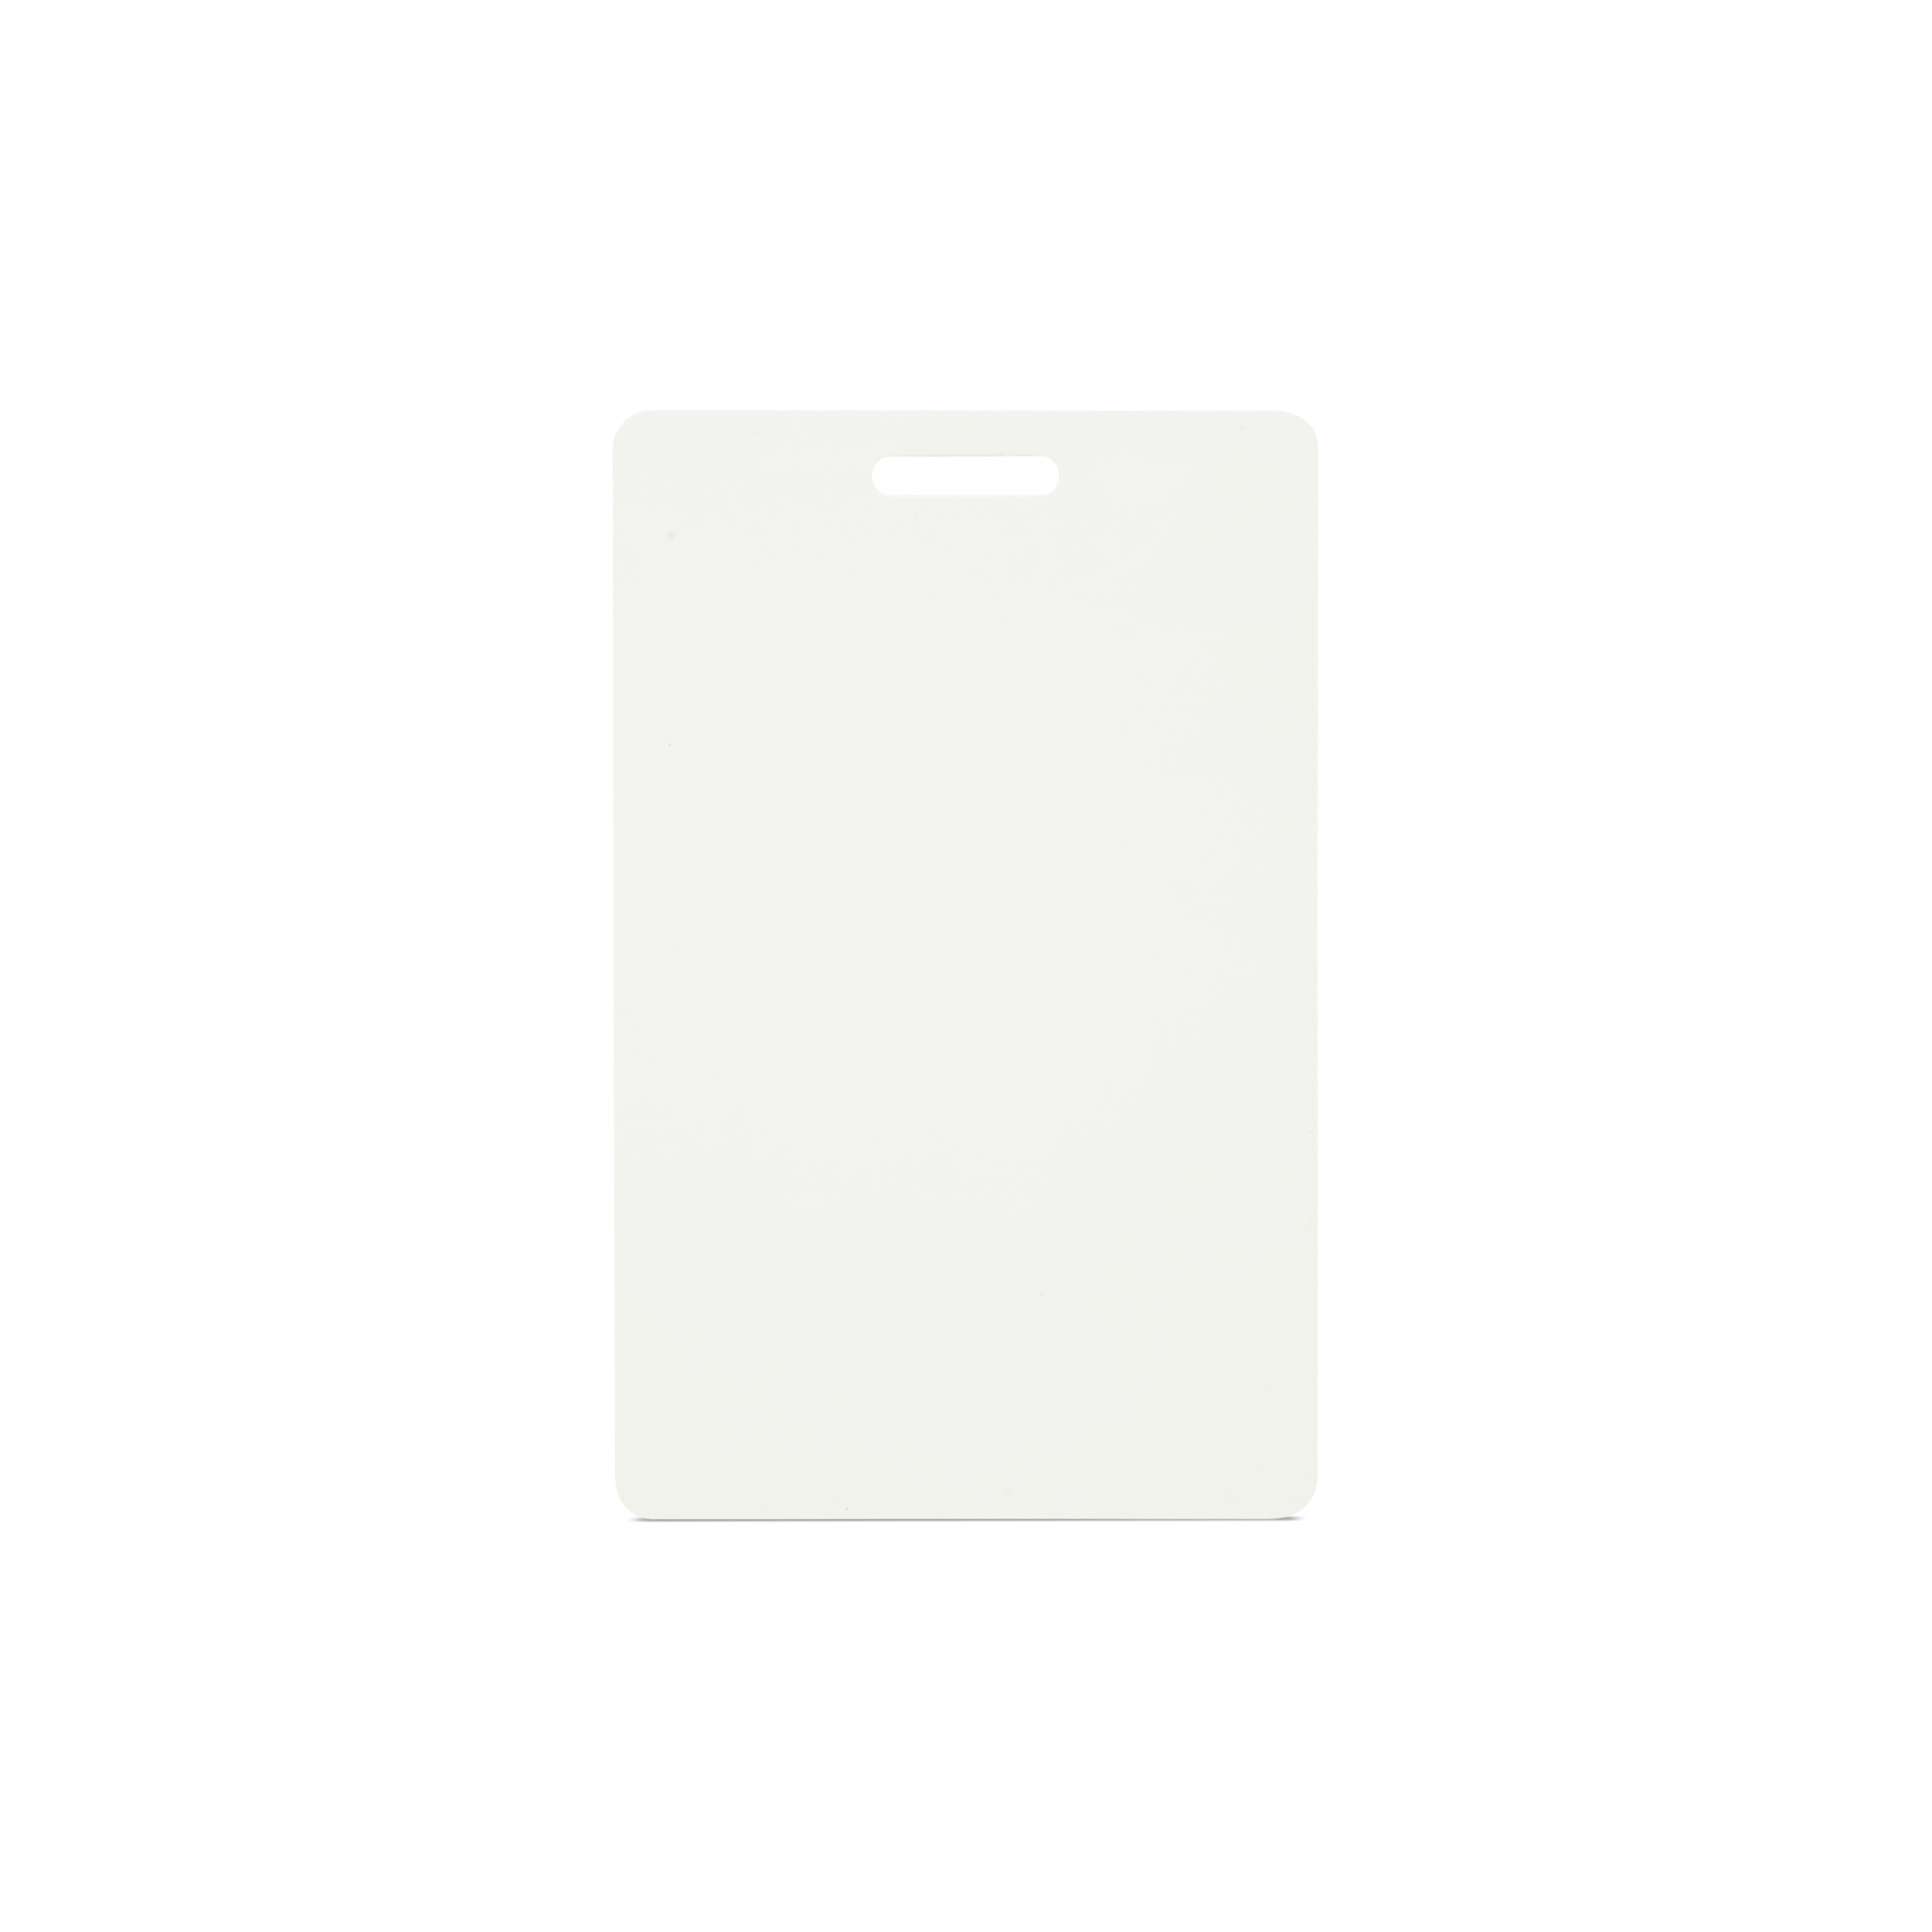 NFC Card PVC - 85,6 x 54 mm - NTAG213 - 180 Byte - white - portrait with slot